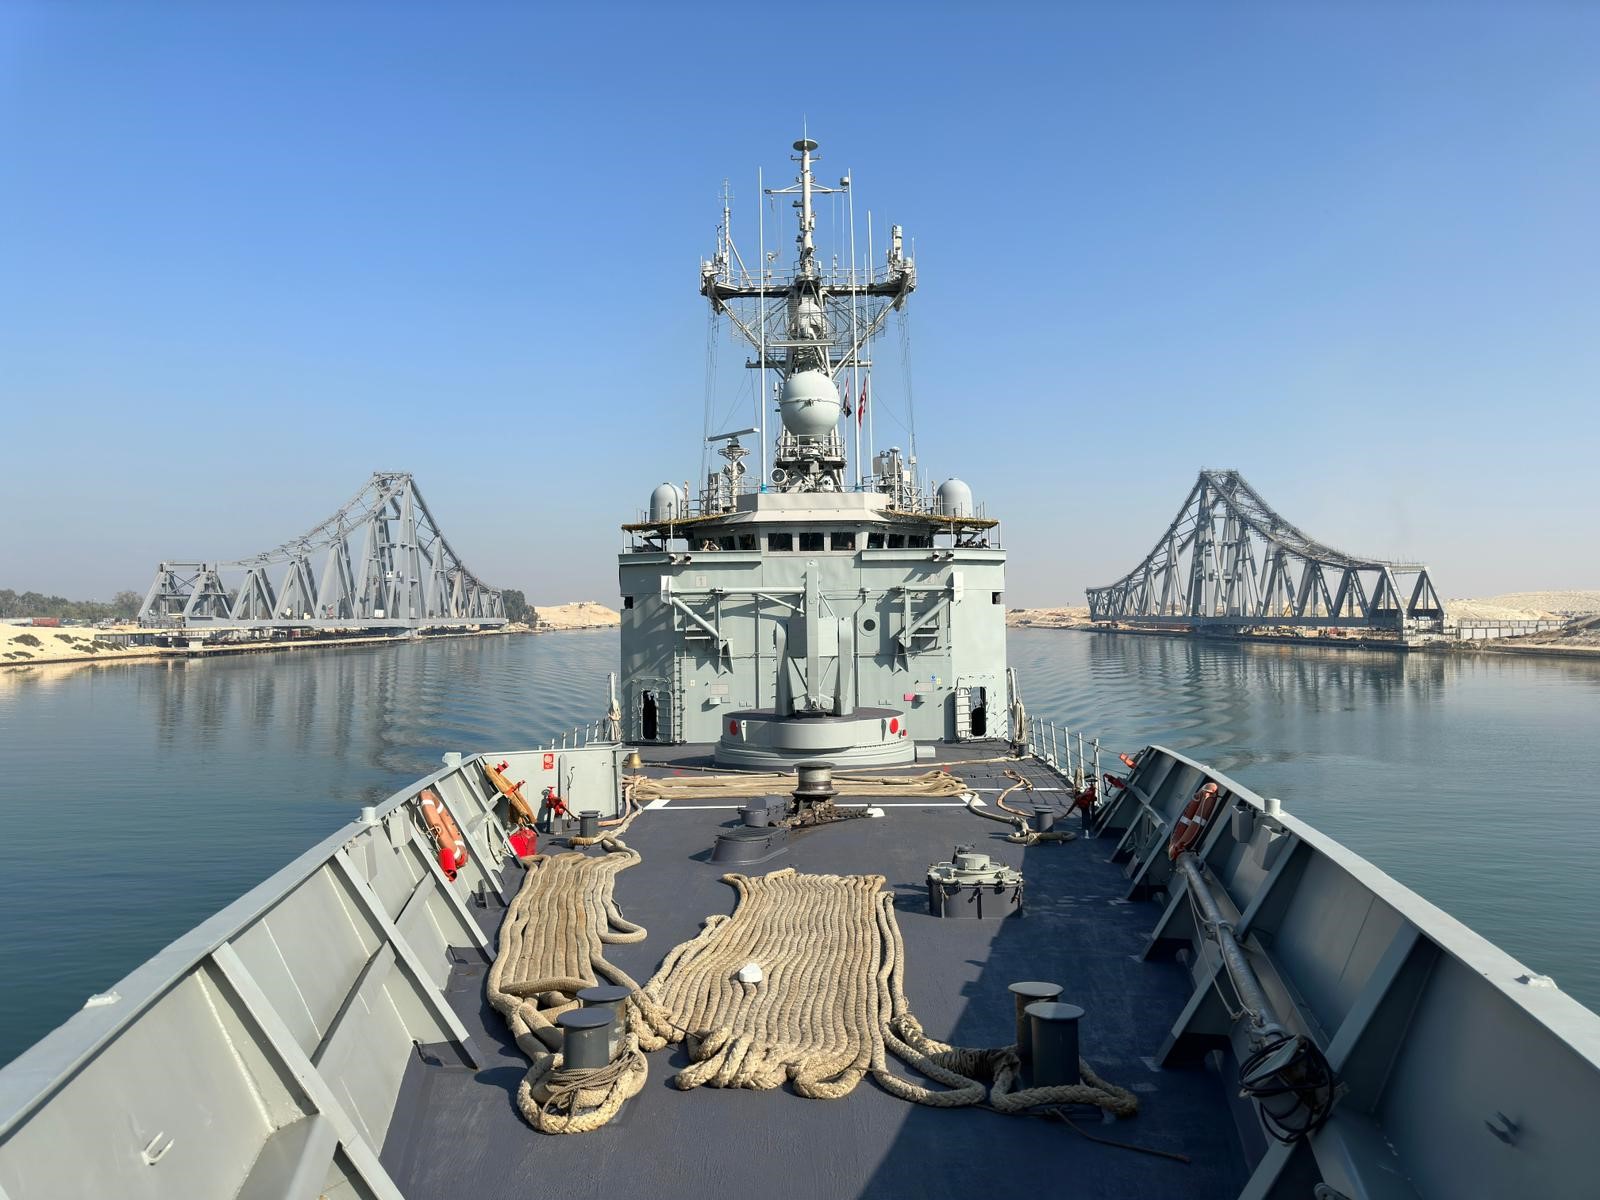 The frigate 'Santa Maria' (F-81) crosses the Suez Canal